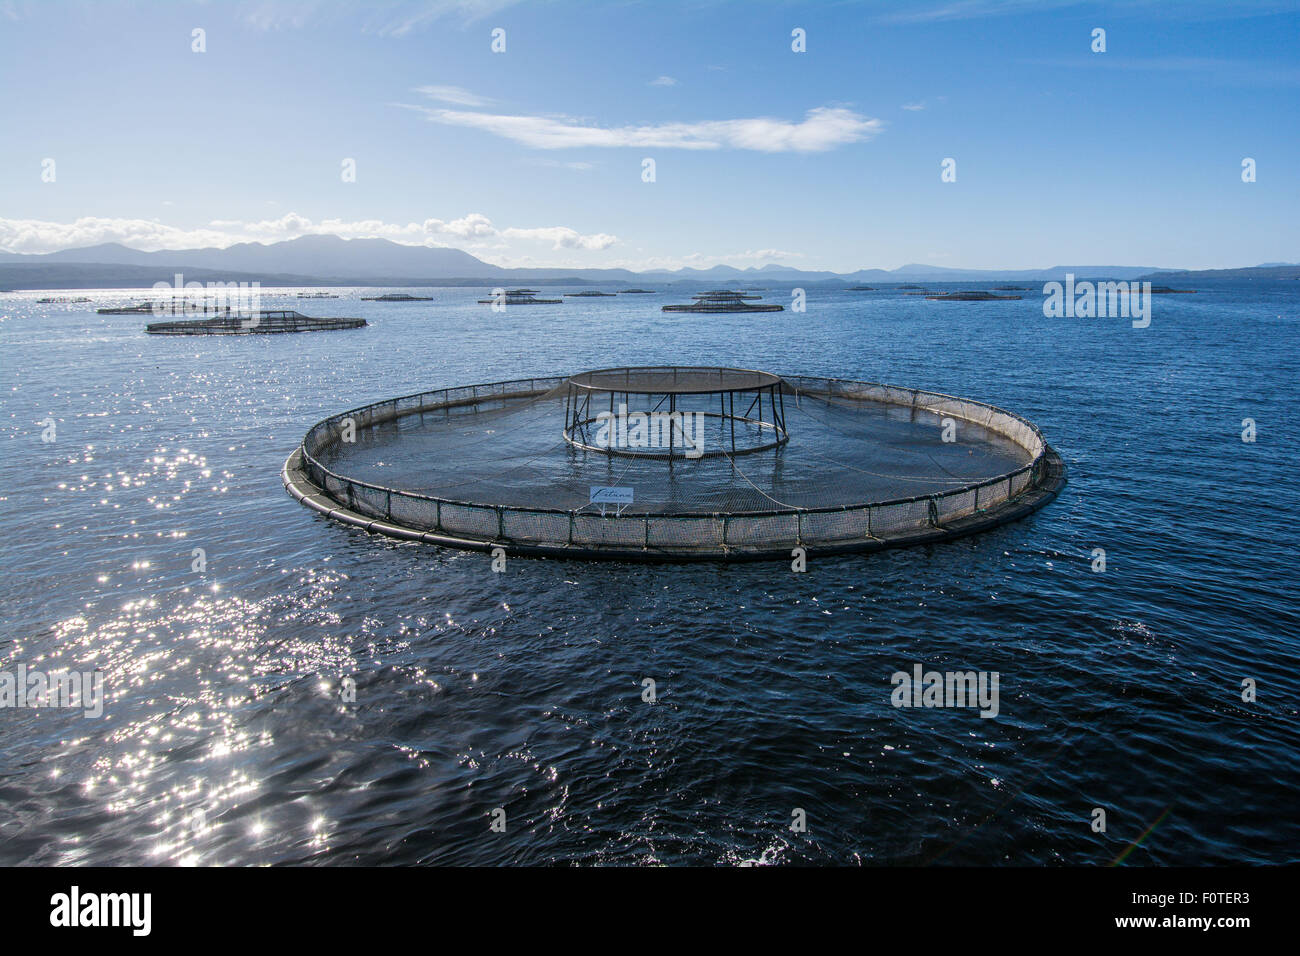 Atlantic Salmon aquaculture farming, Macquarie Harbor, Tasmania, Australia Stock Photo